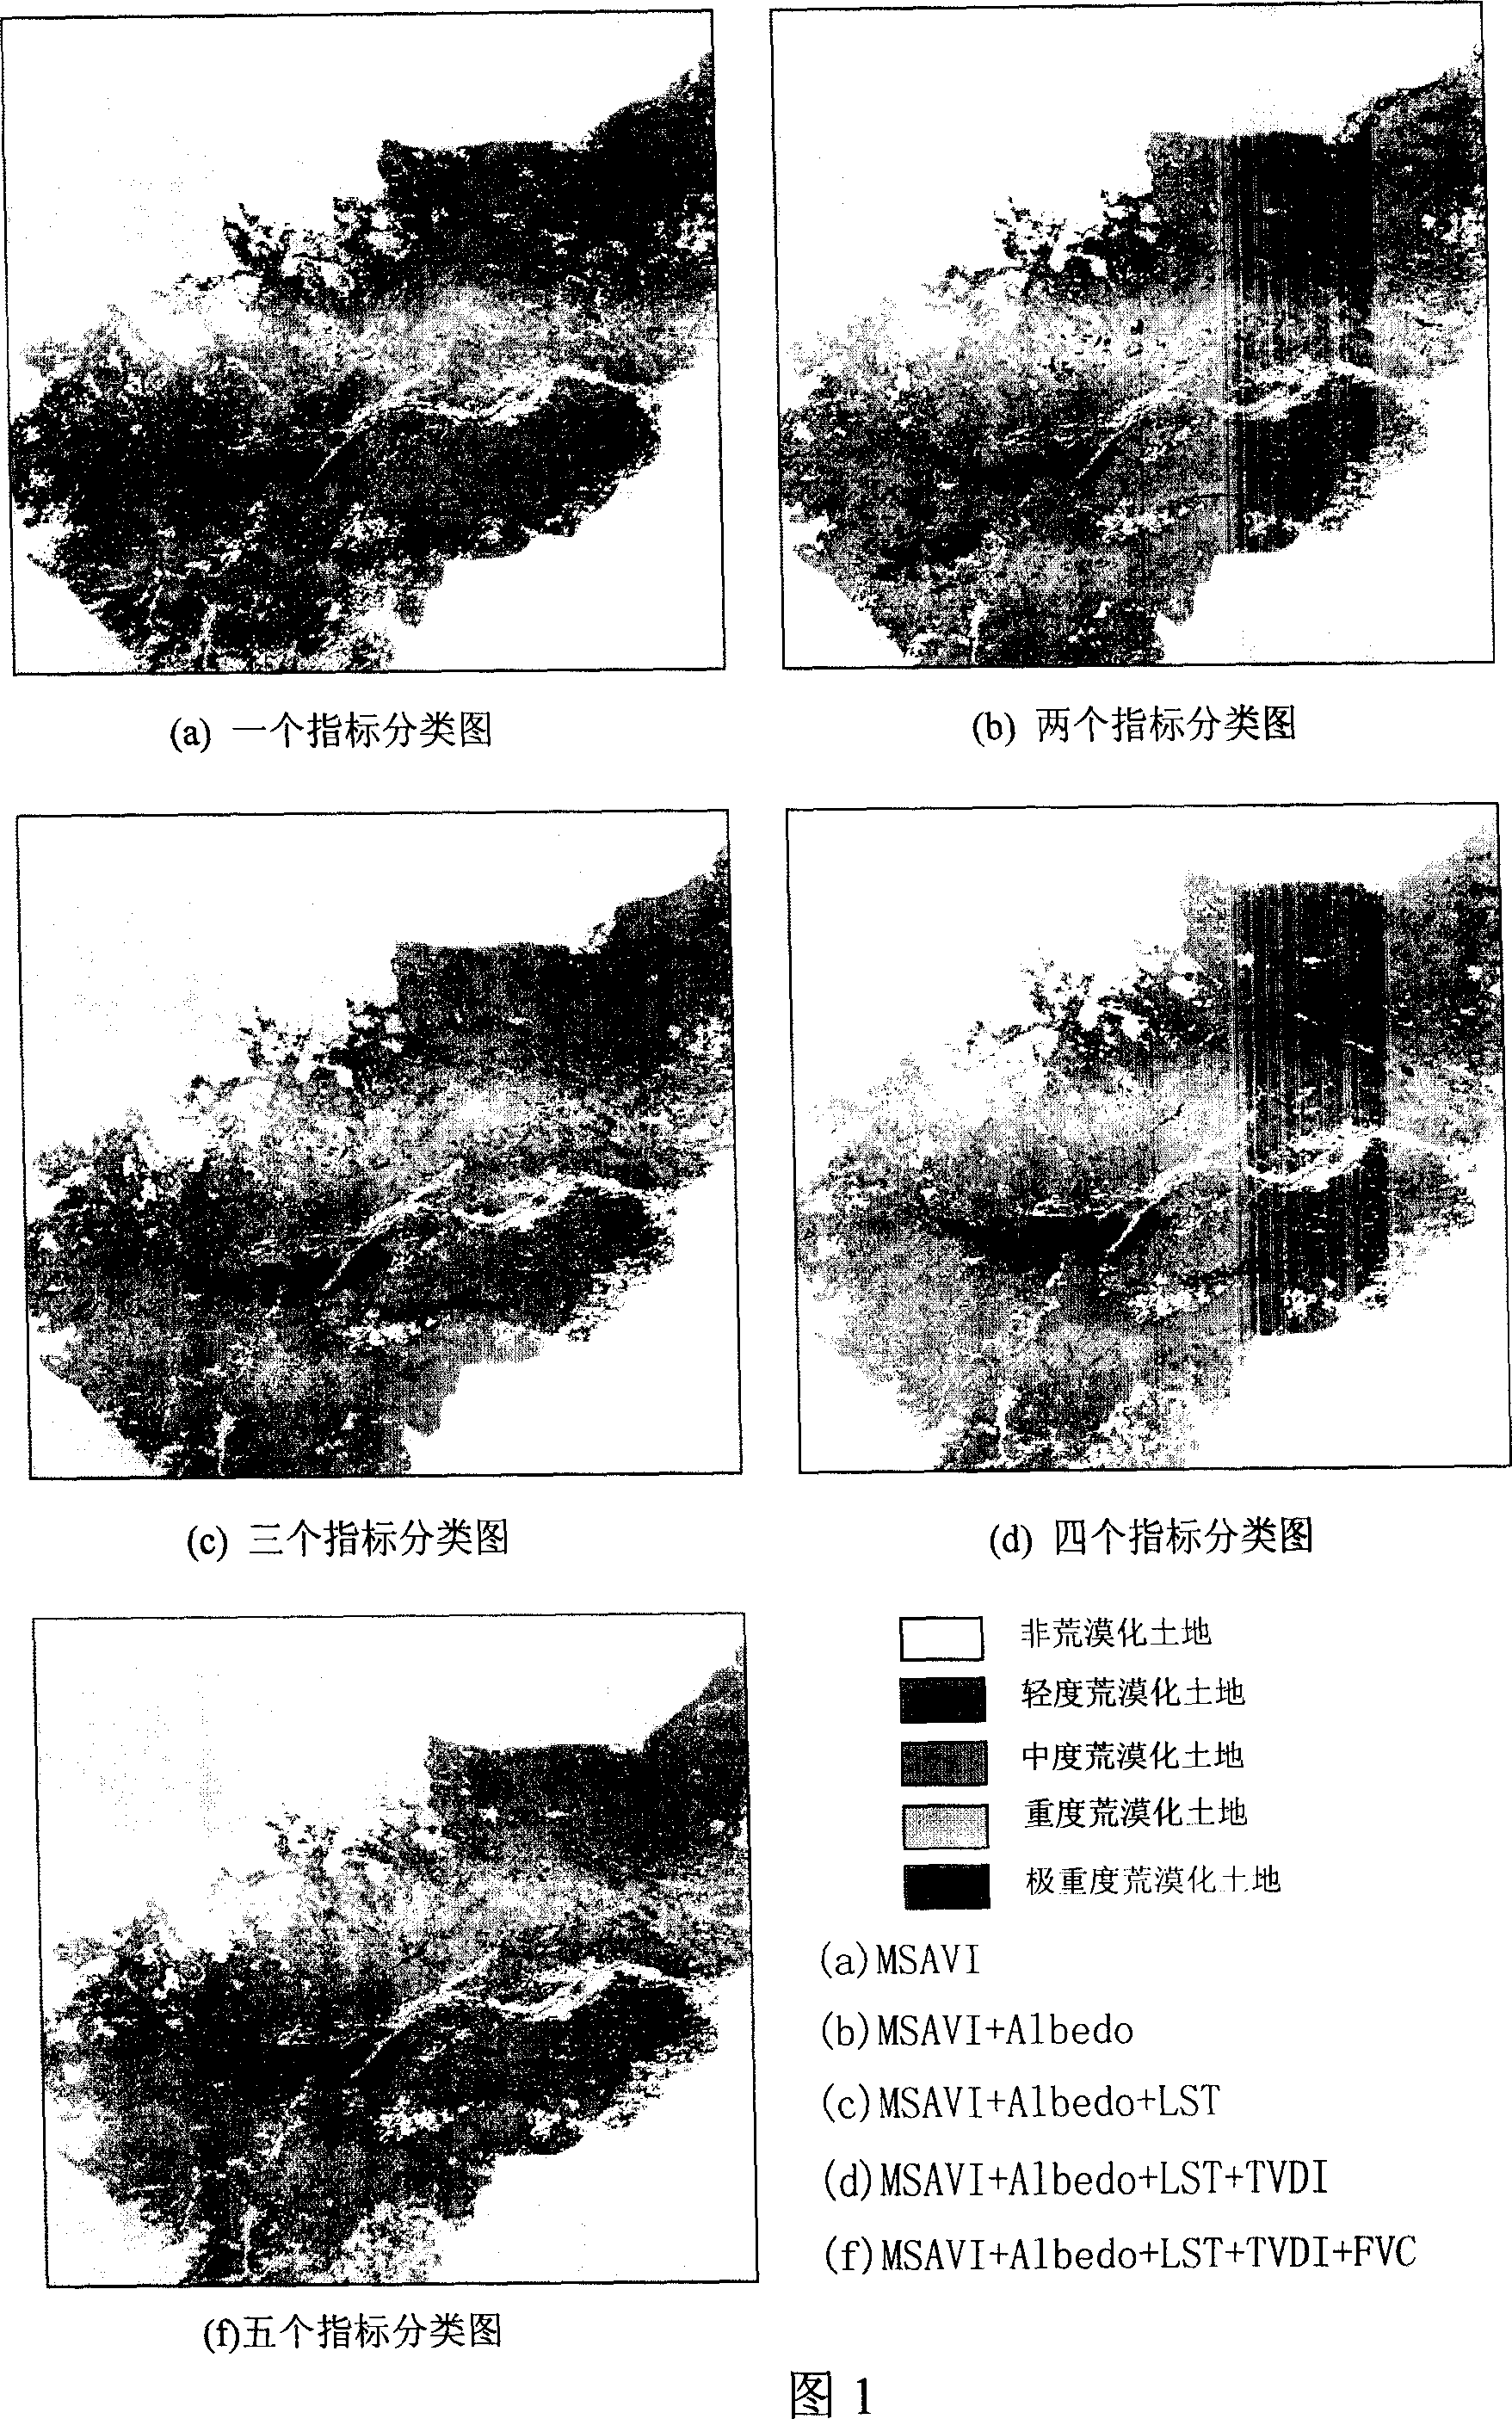 Land deterioration (desert) evaluation parameter remote control inversion and supervision technique method